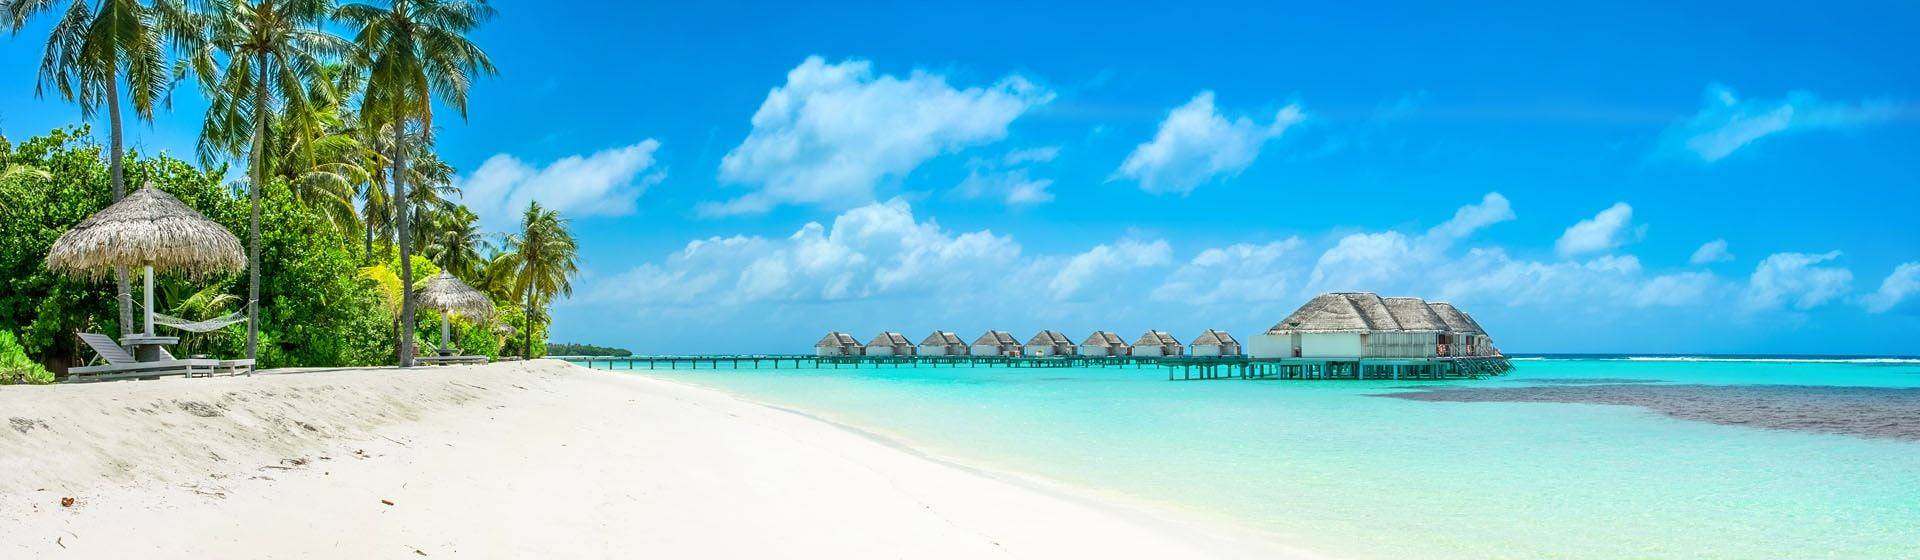 Holidays to Lhaviyani Atoll Image